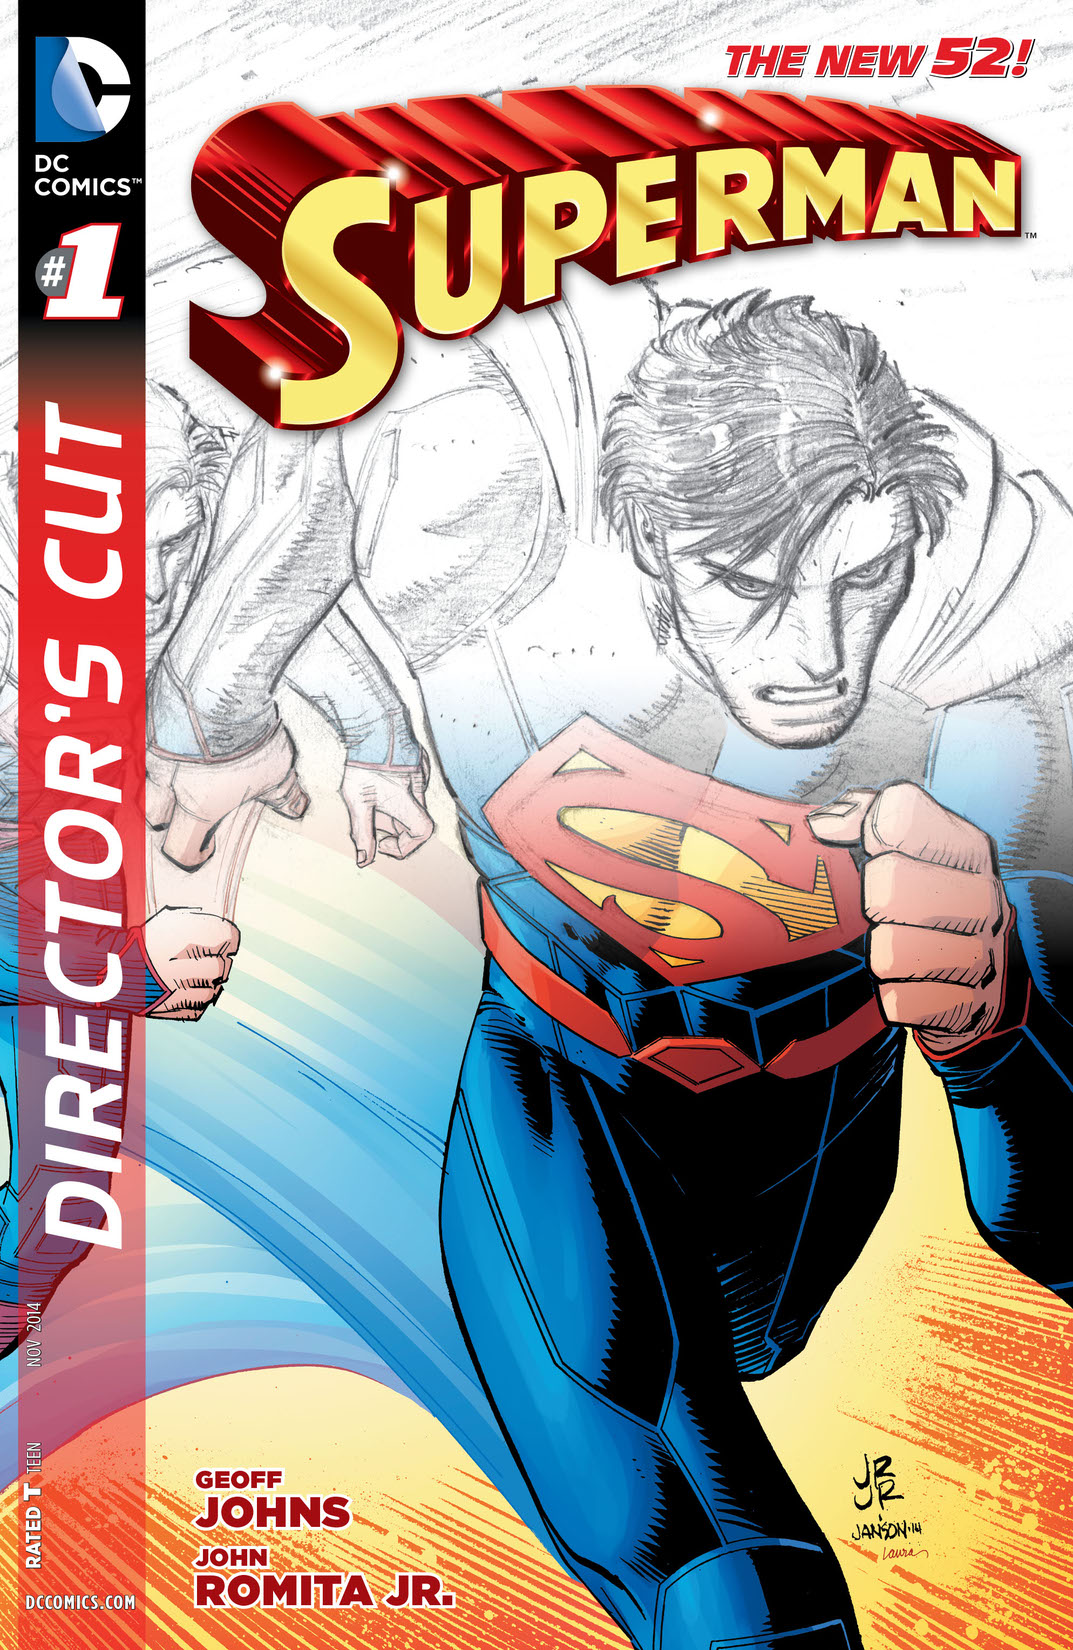 Супермен 2011. Комикс Джон. Ромита младший. Geoff Johns Superboy. Супер джон